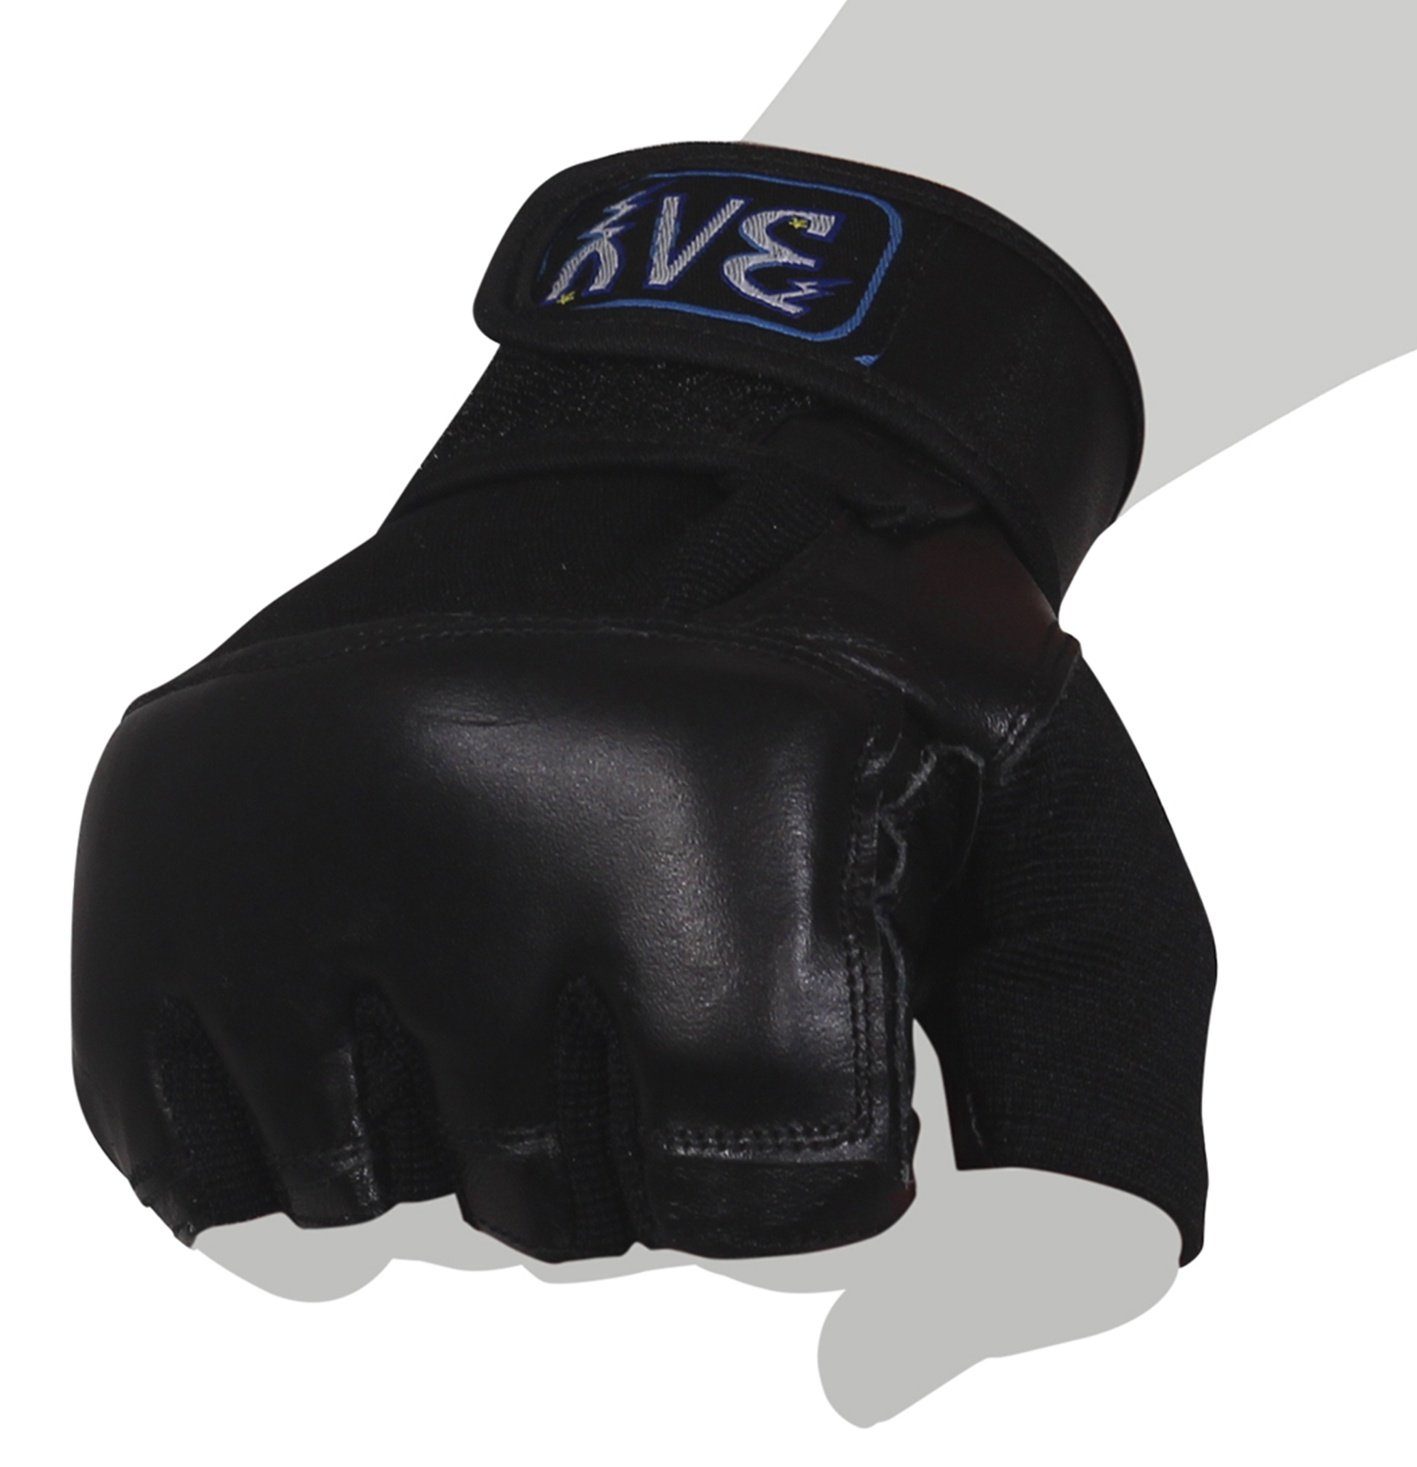 Boxsack Boxhandschuhe XL robust, Leder, Sandsack - S Sandsackhandschuhe BAY-Sports Handschutz, Orbit sehr